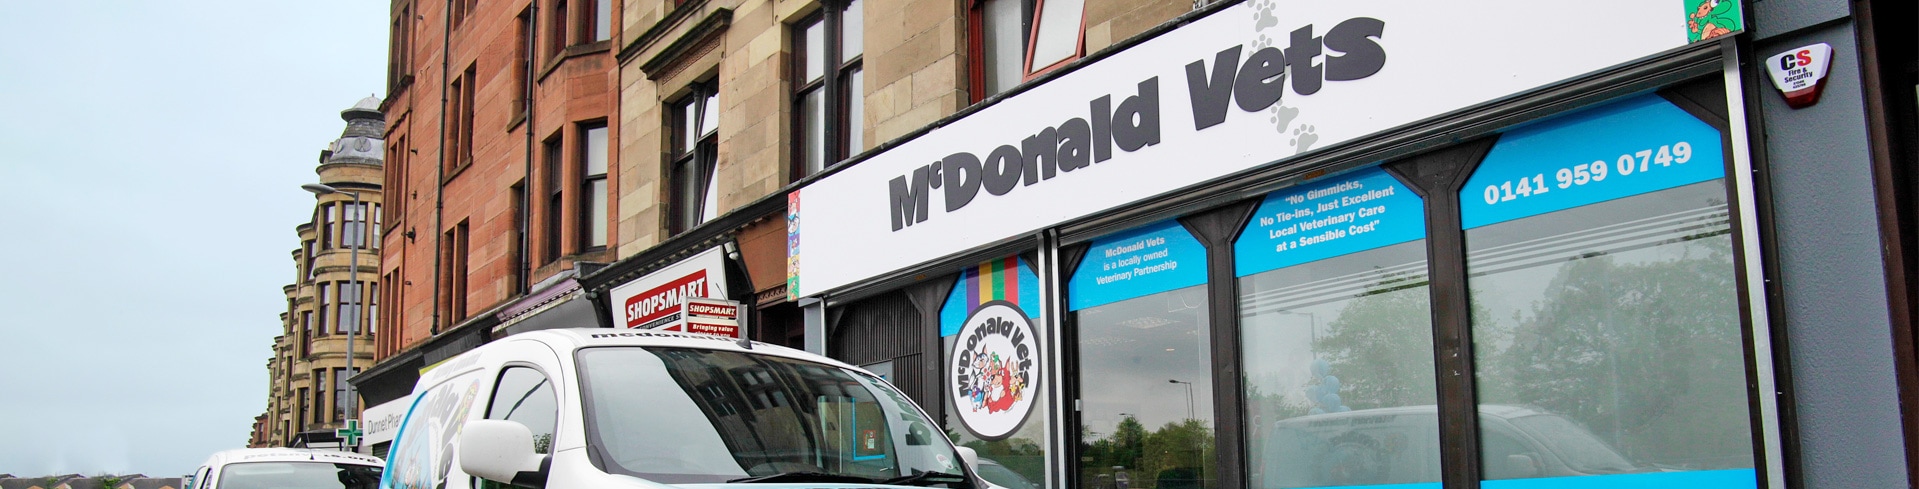 McDonald Vets - Scotstoun 